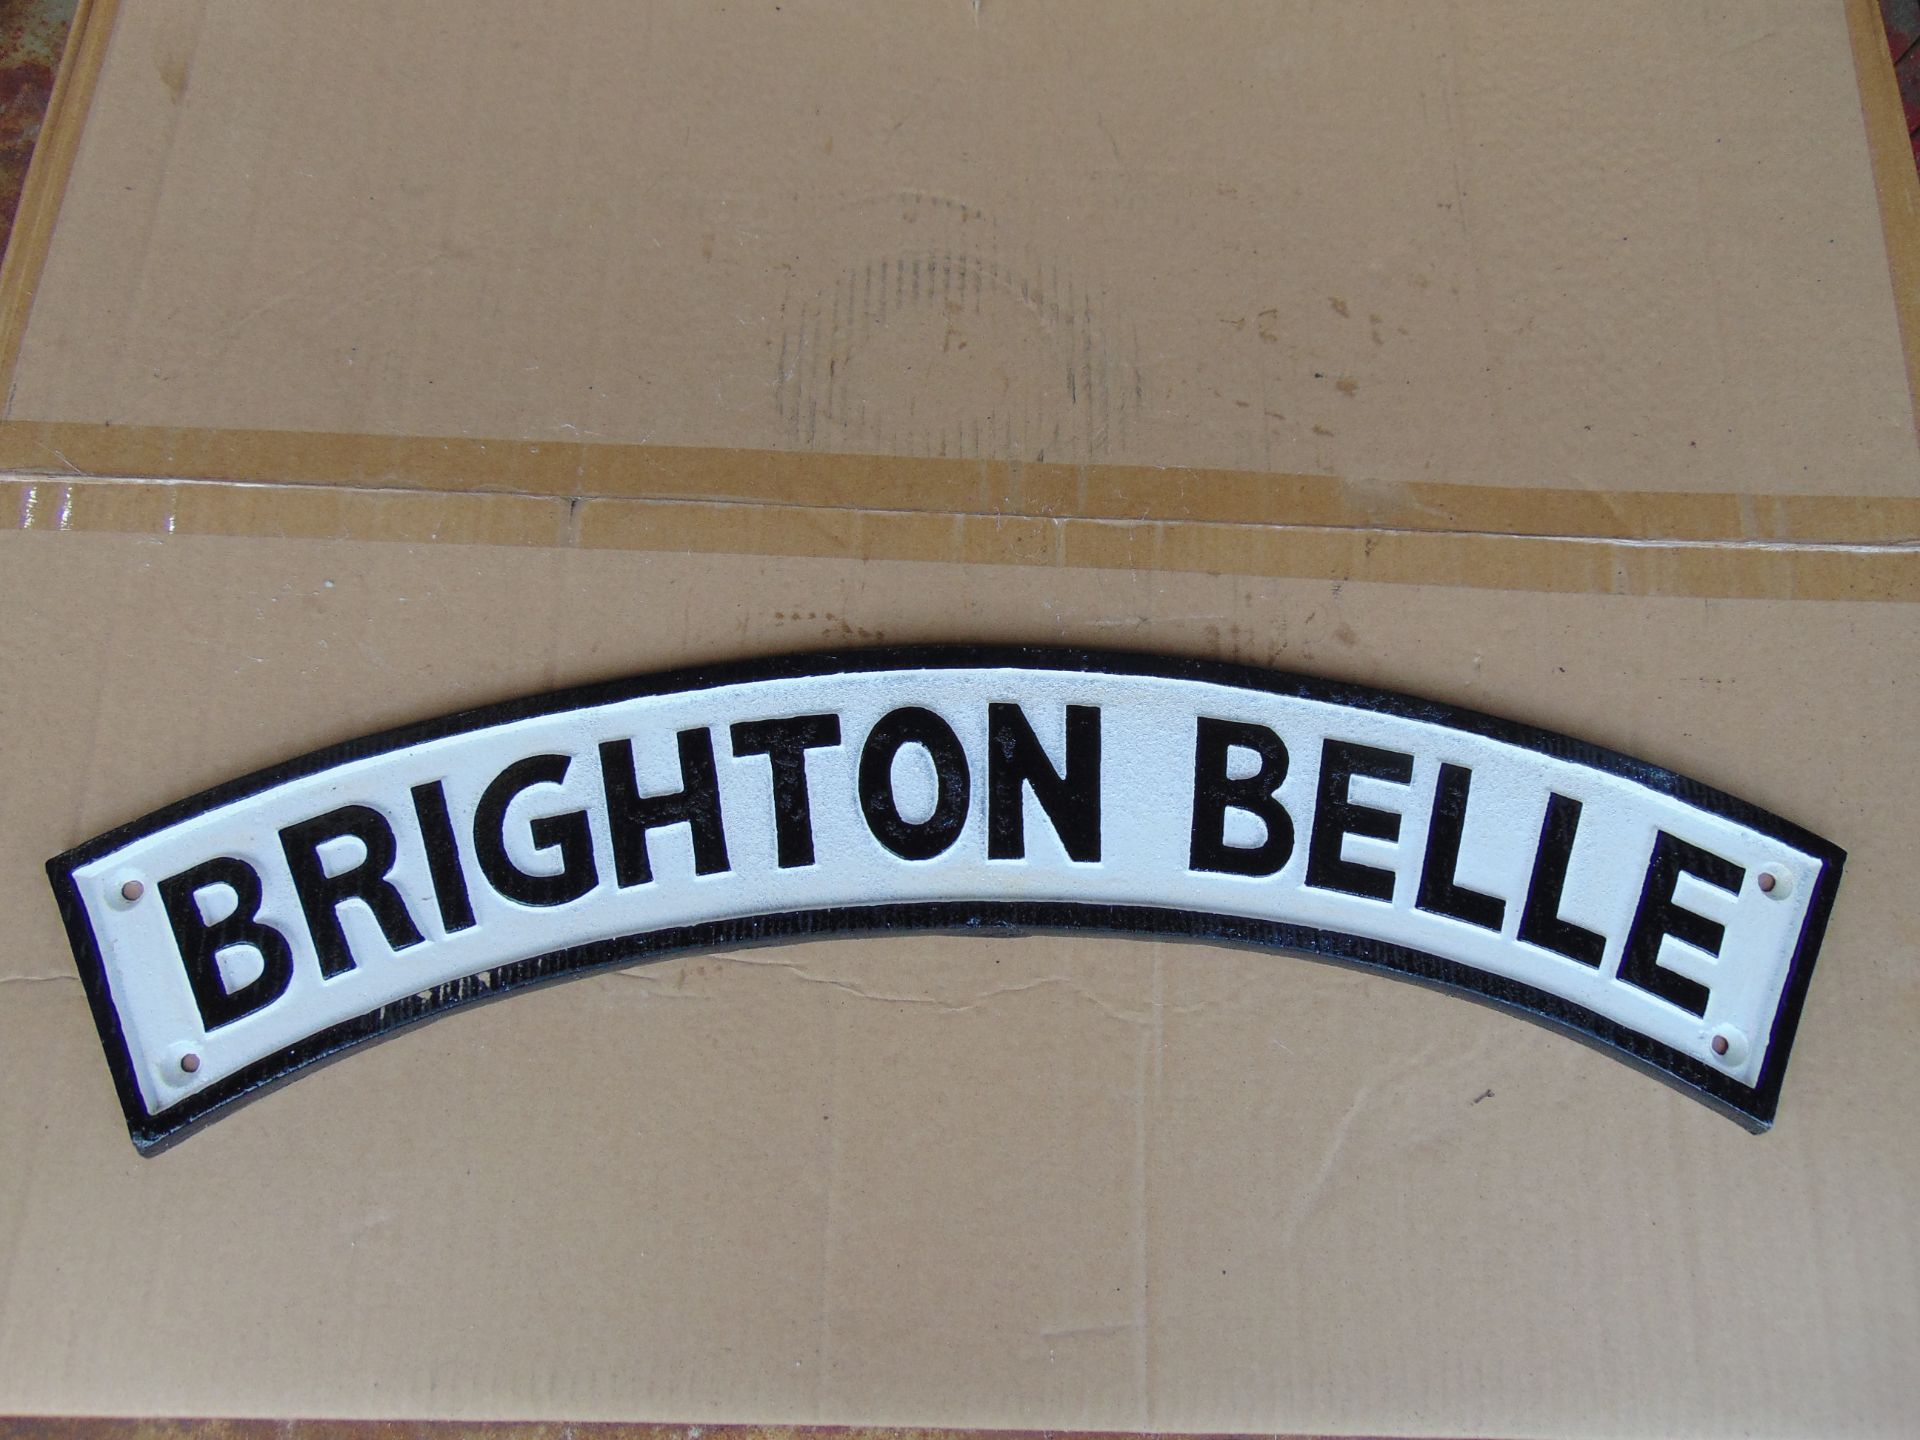 Brighton Belle Cast Iron Railway Train Name Plaque